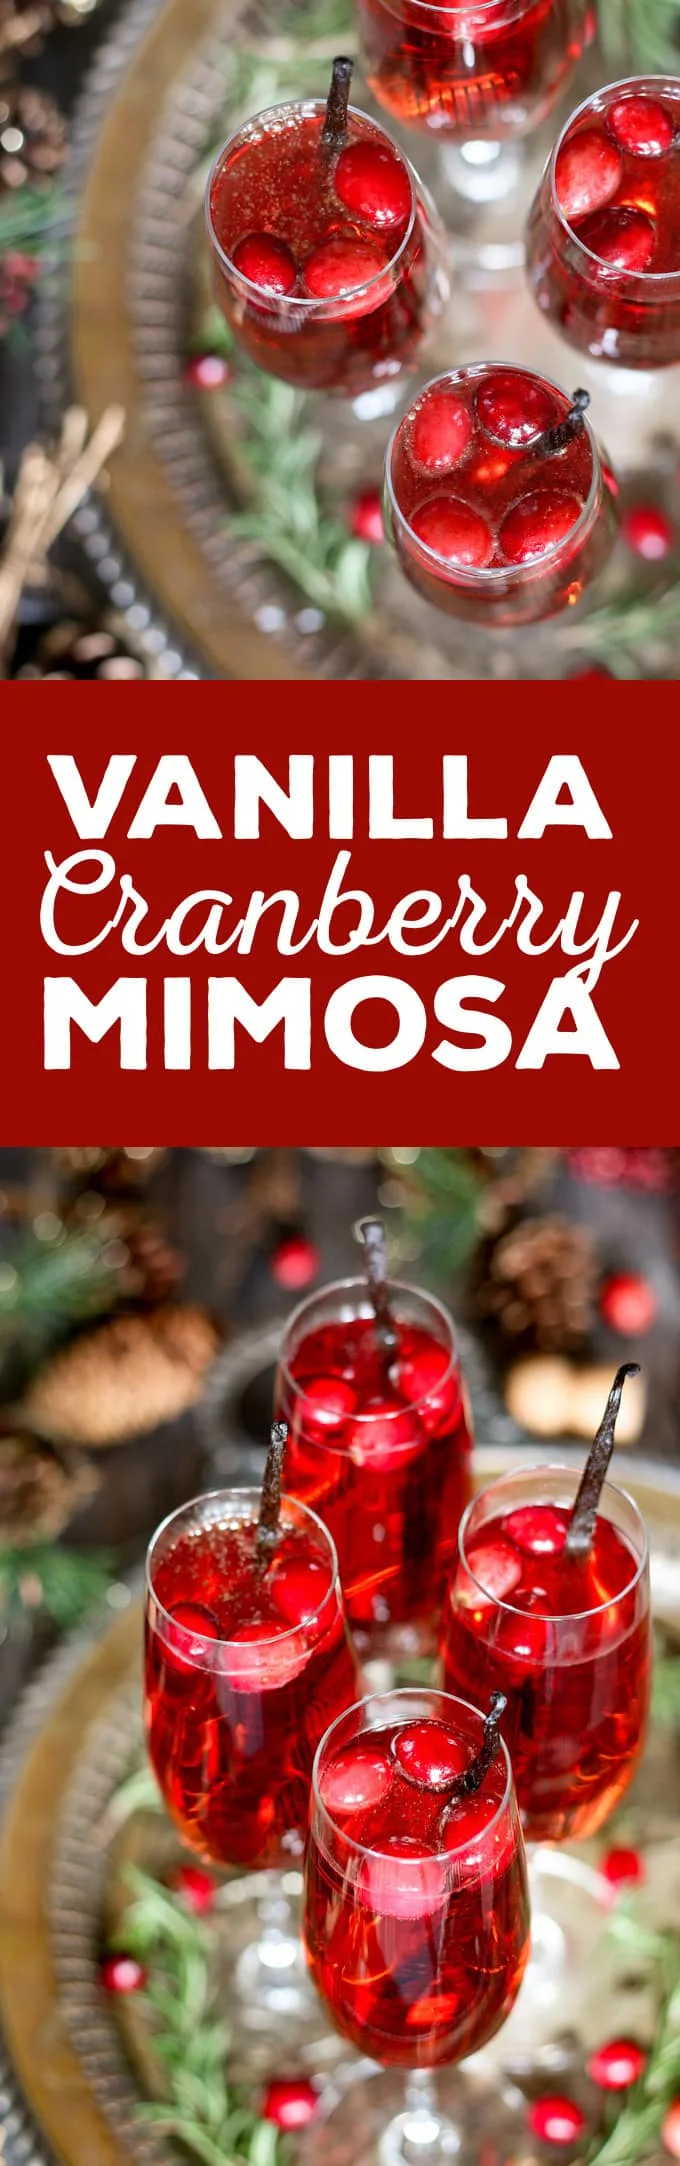 Pinterest image of vanilla cranberry mimosa